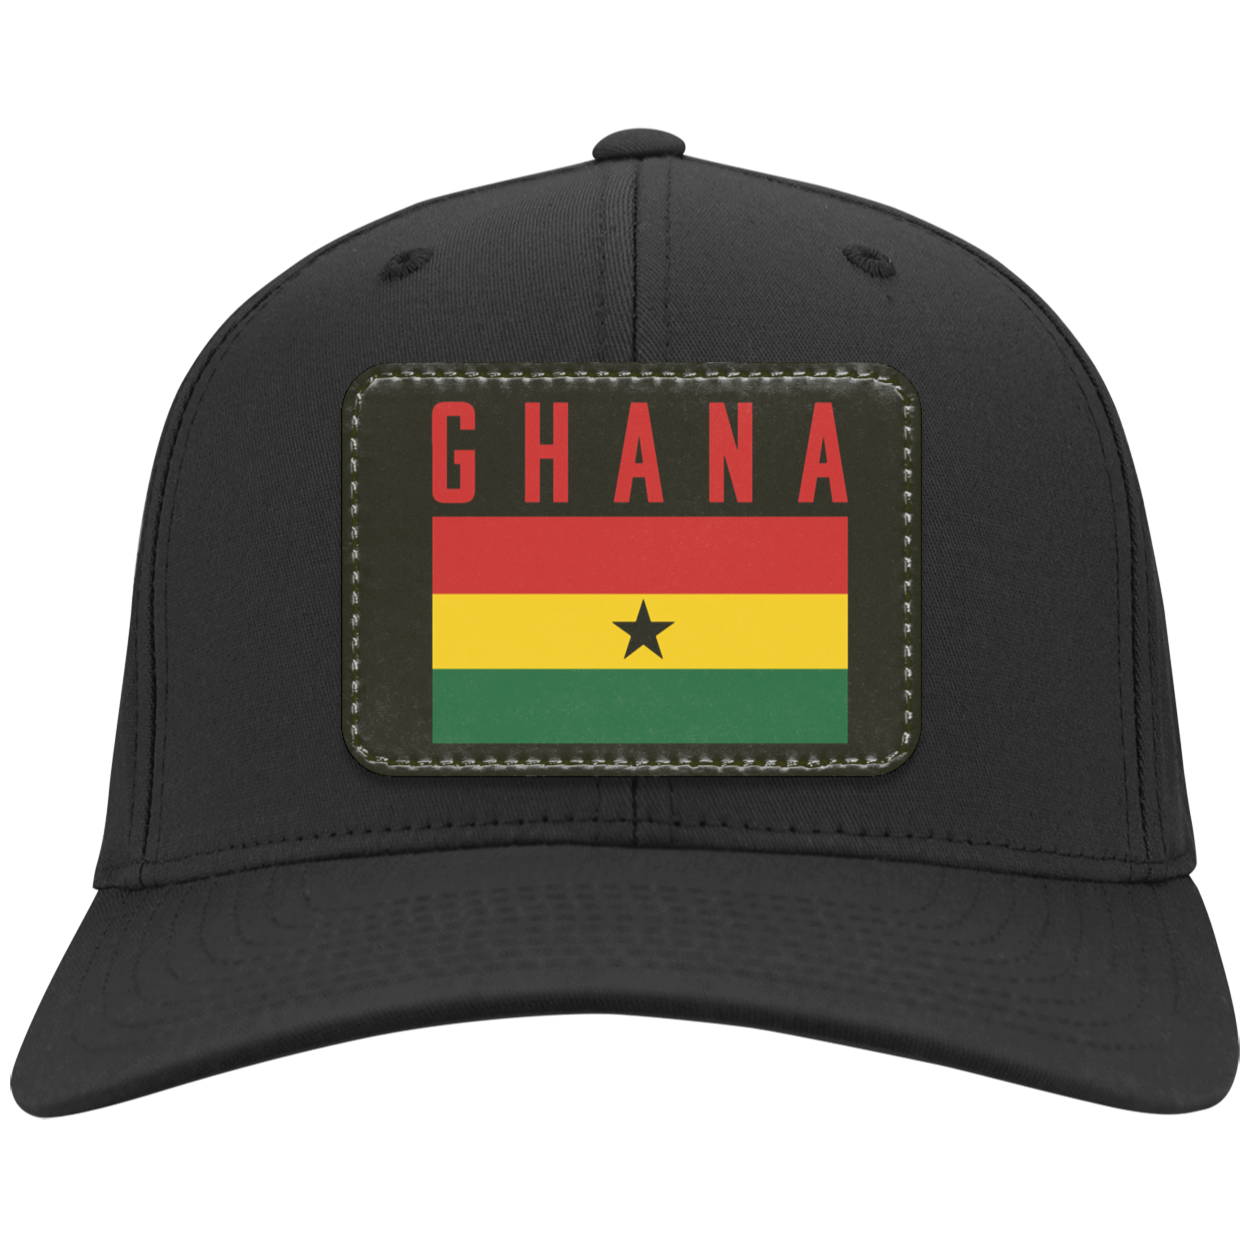 Ghana Football Team Emblem Patch Twill Cap